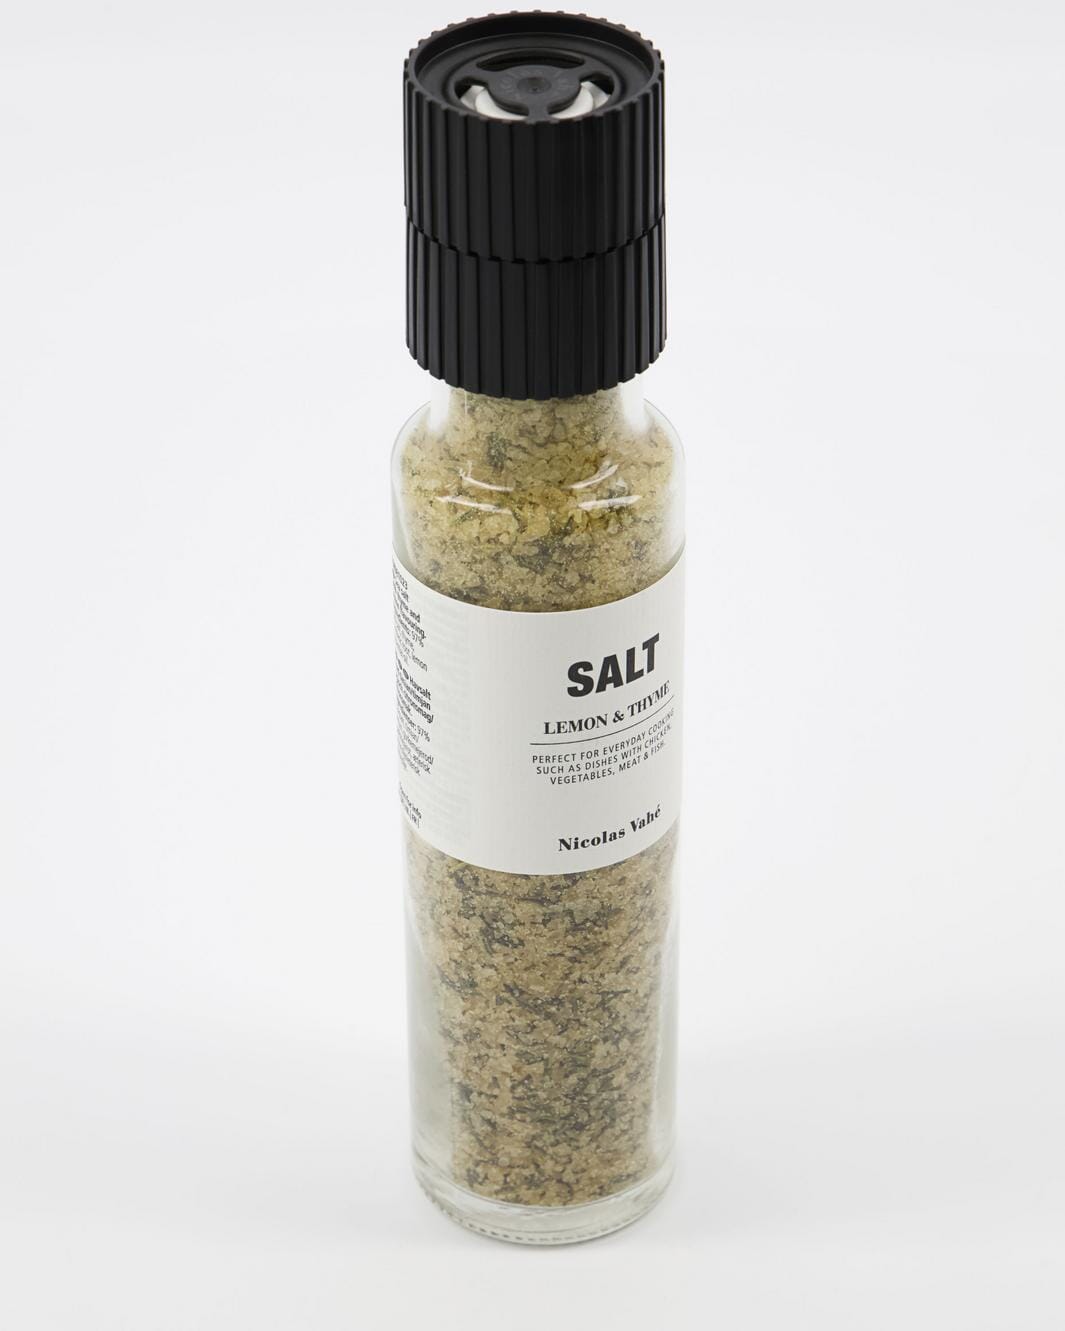 Nicolas Vahe - Salt, Lemon & Thyme